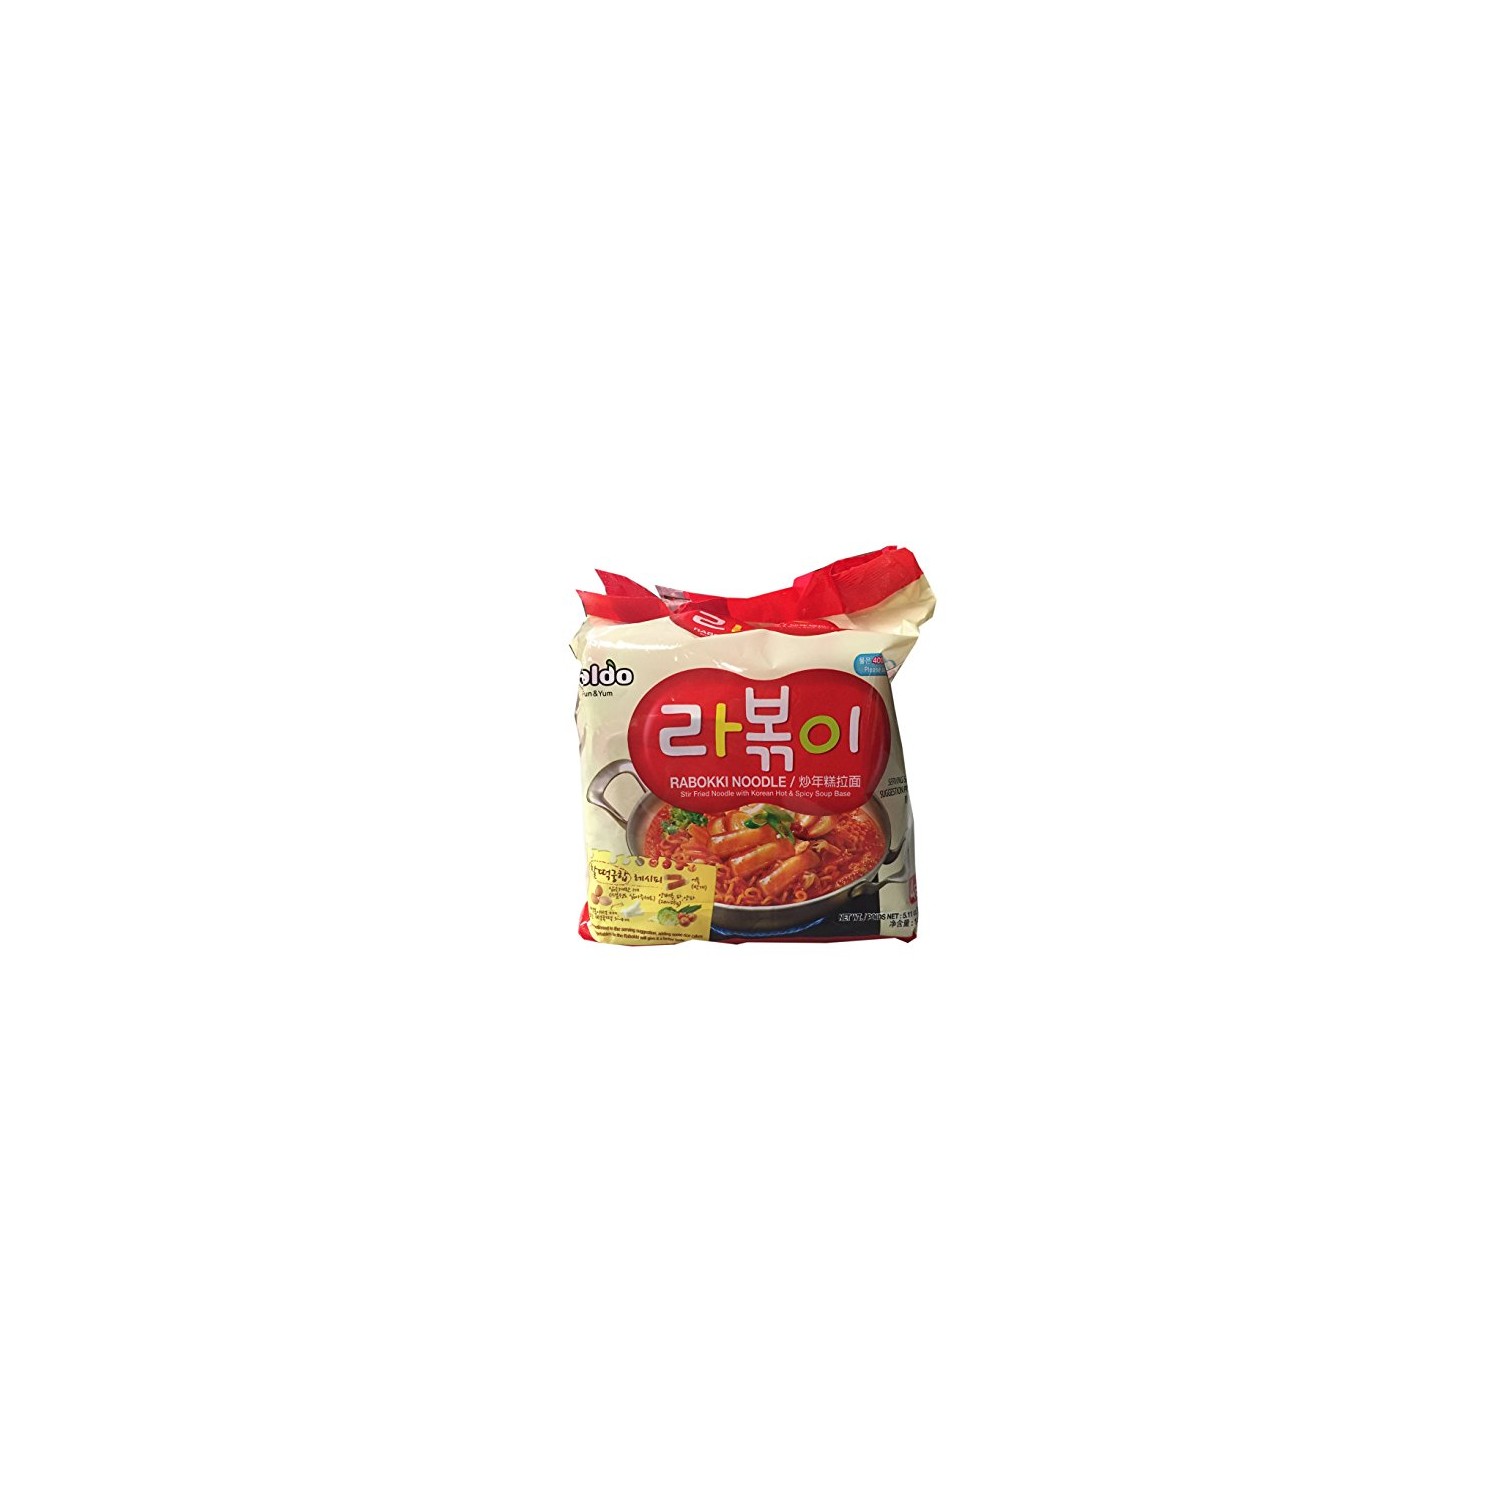 Paldo Noodles Korean Rabokki Tteokbokki (라볶이) 145g Ramyun Noodles with Topokki Rice Cakes - 0648436101054